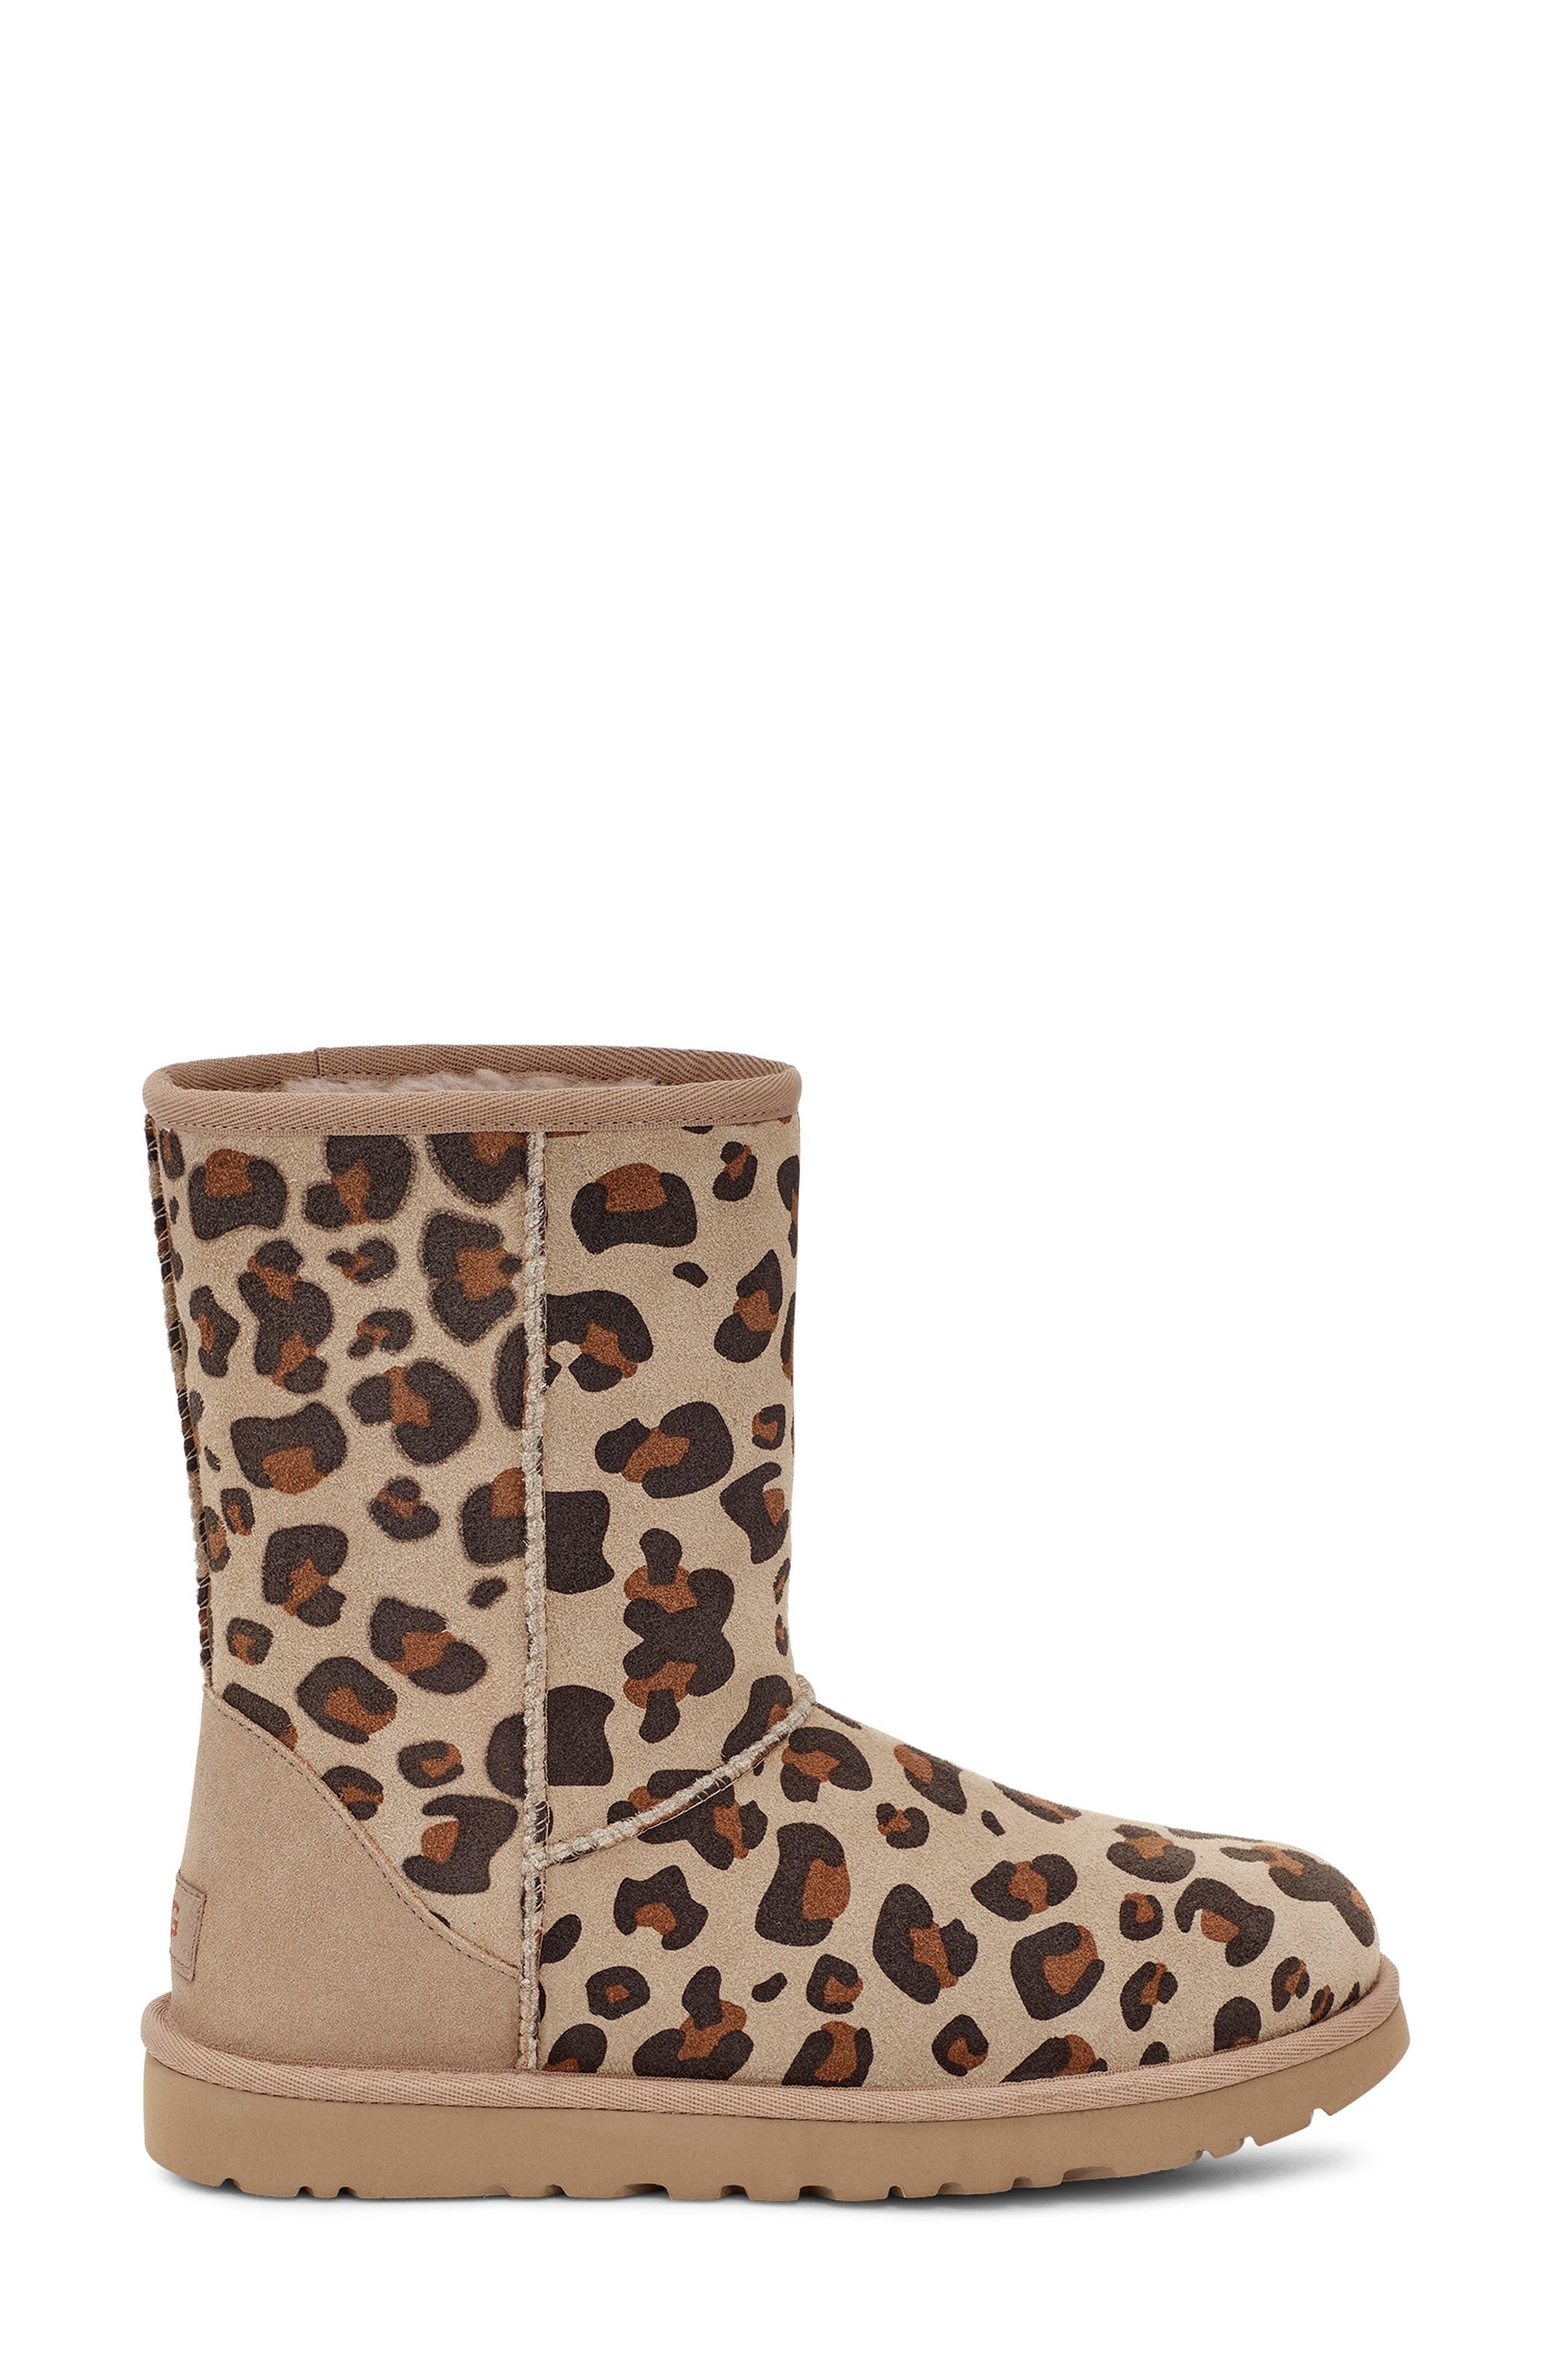 UGG Classic Short Ii Genuine Sheepskin Lined Leopard Print Boot in Brown |  Lyst